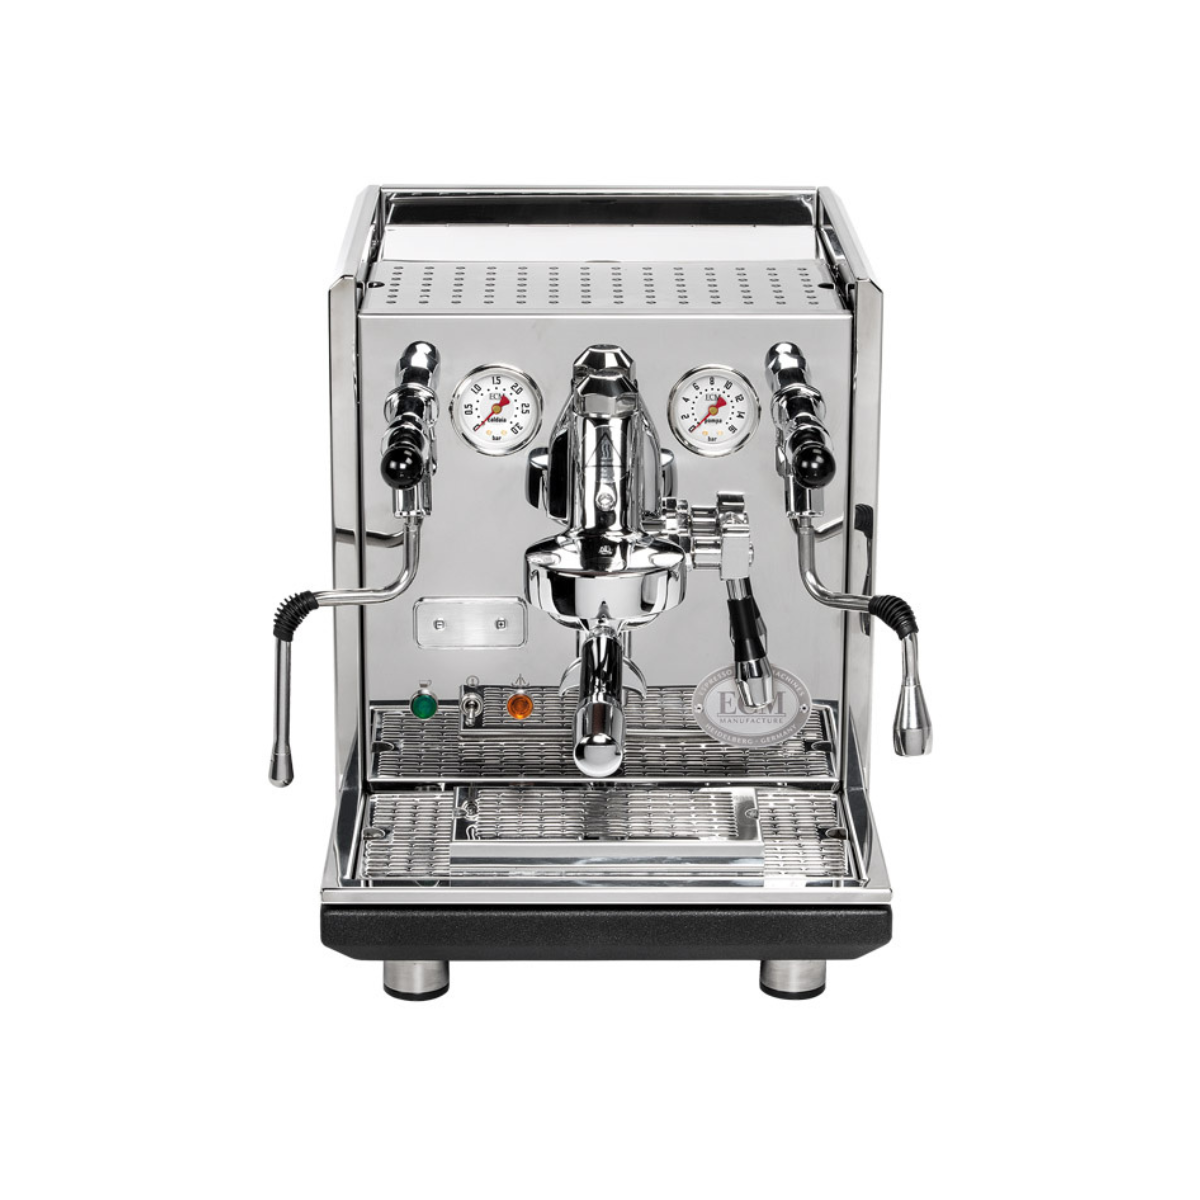 ECM Synchronika PID espresso machine - Double boiler